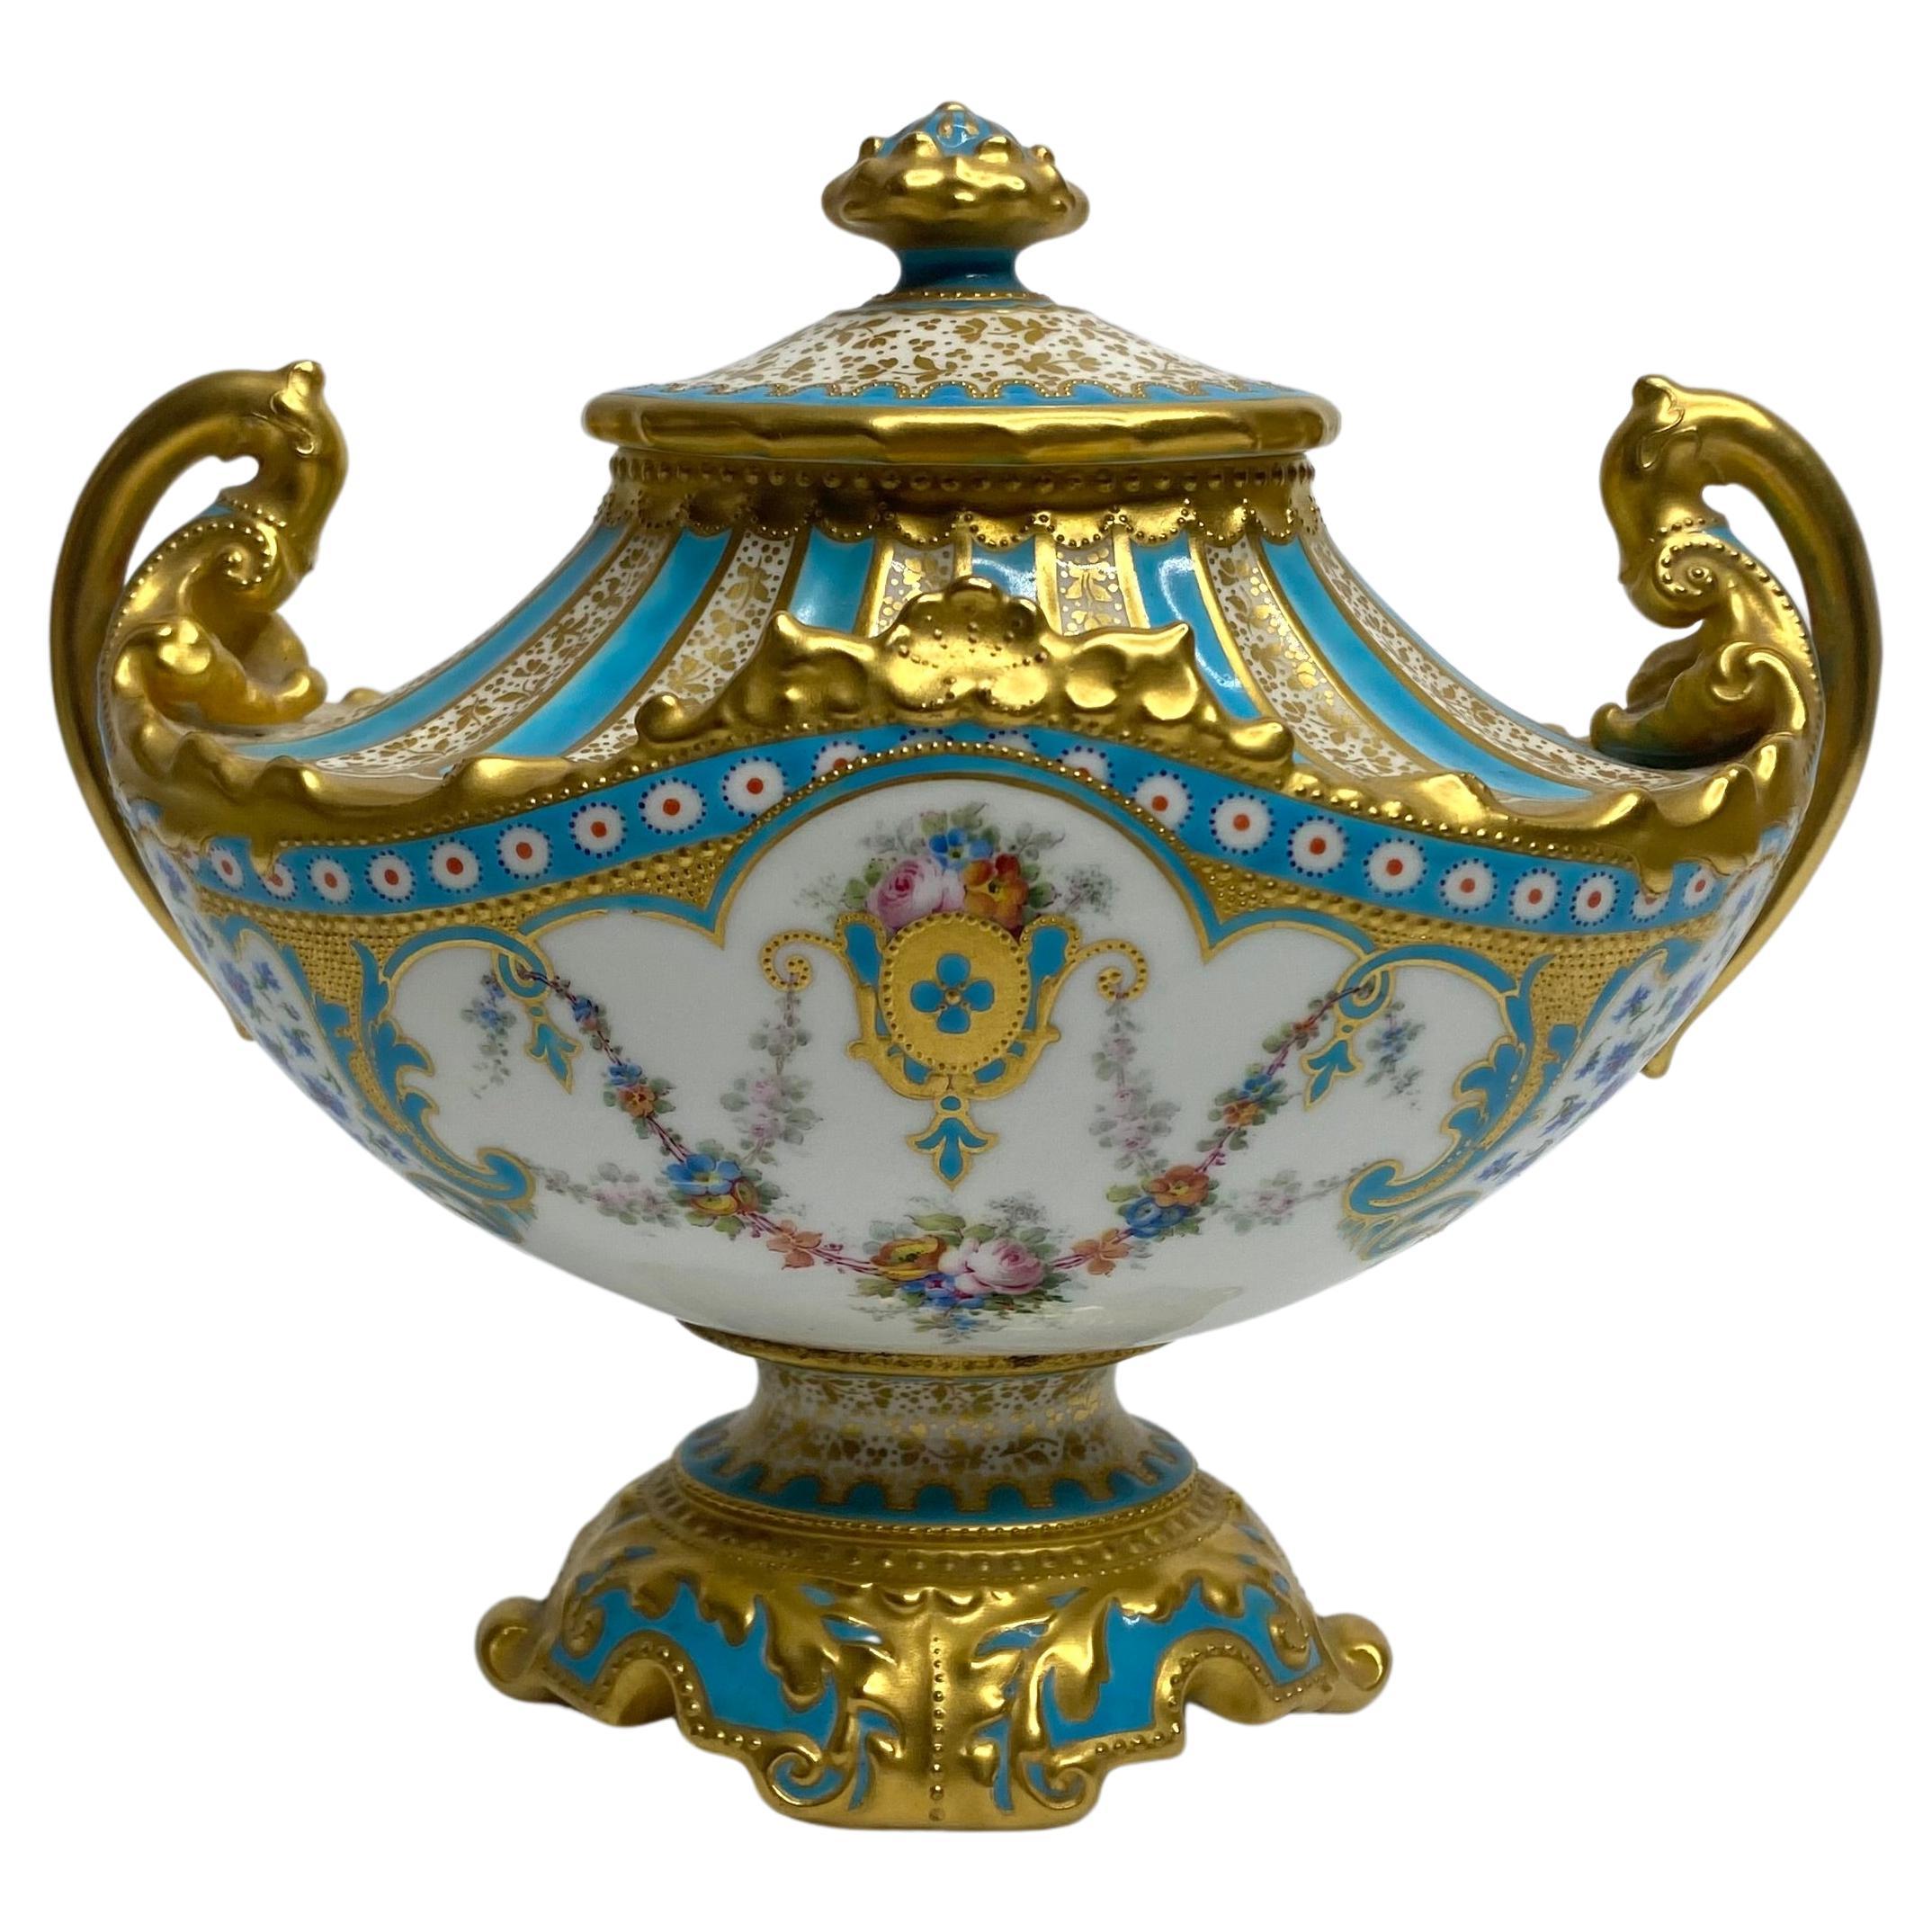 Royal Crown Derby porcelain vase and cover. Desire Leroy, d. 1897.